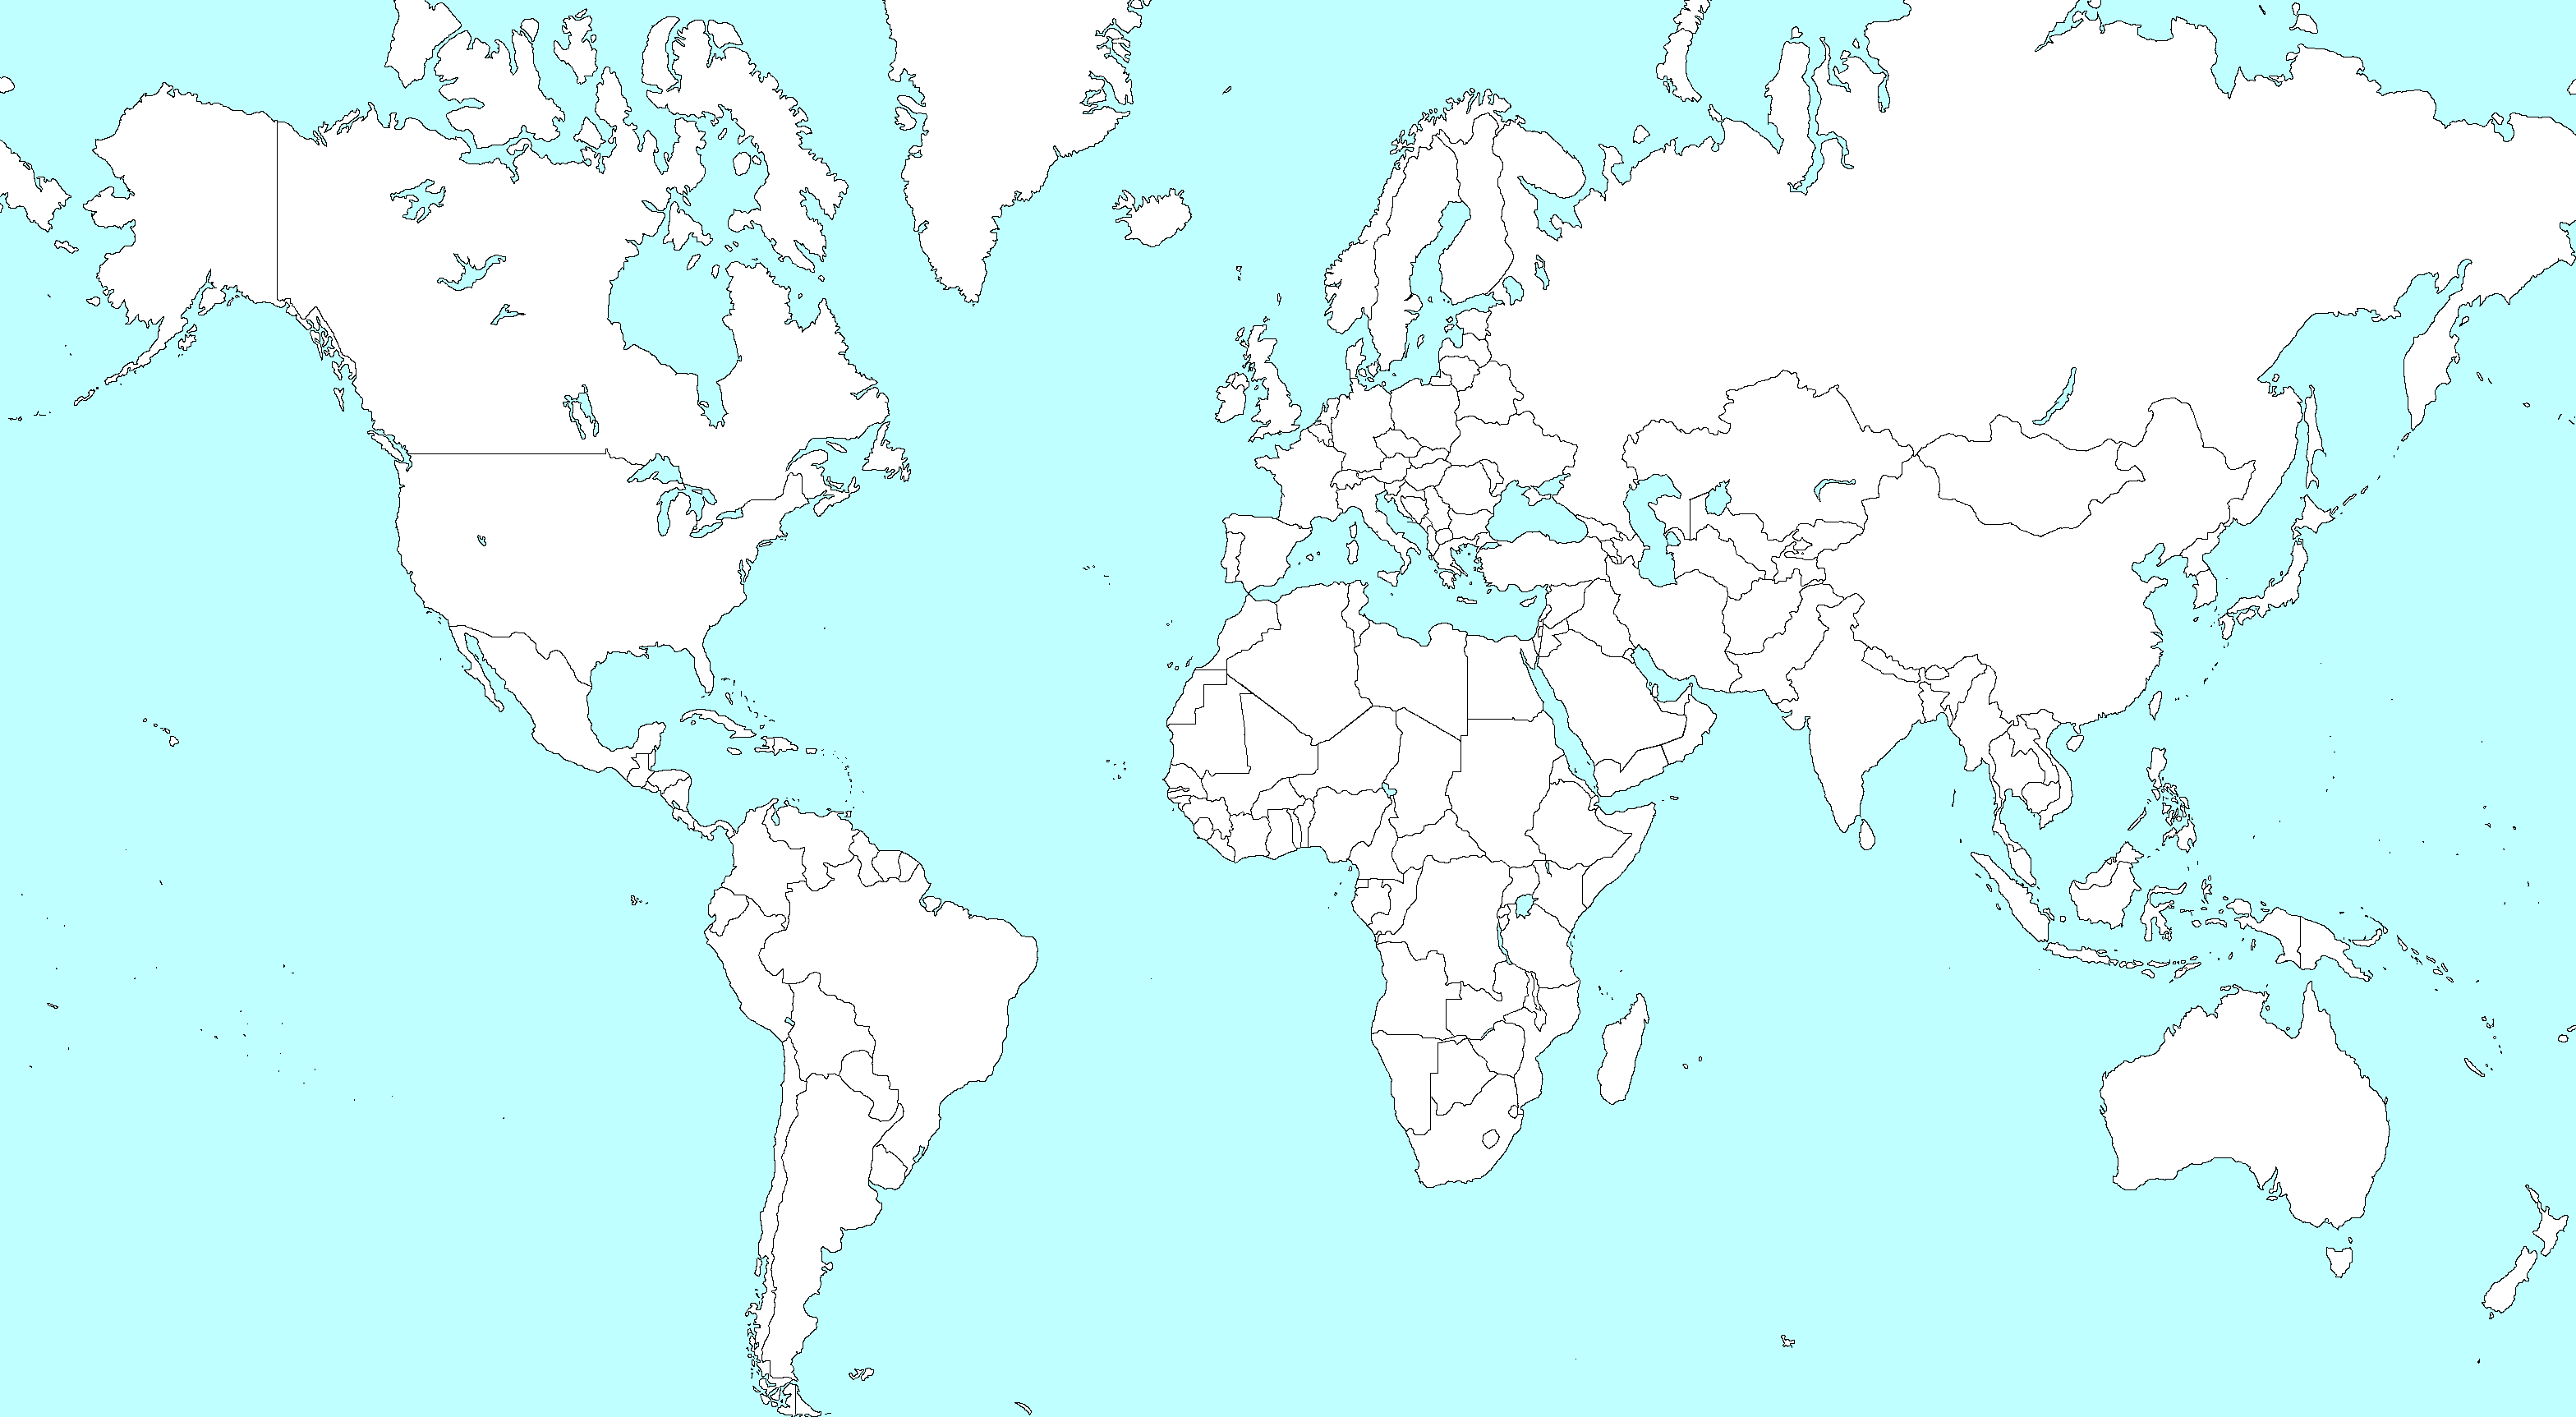 Flat Blank World Map By Godofgold808 On Deviantart